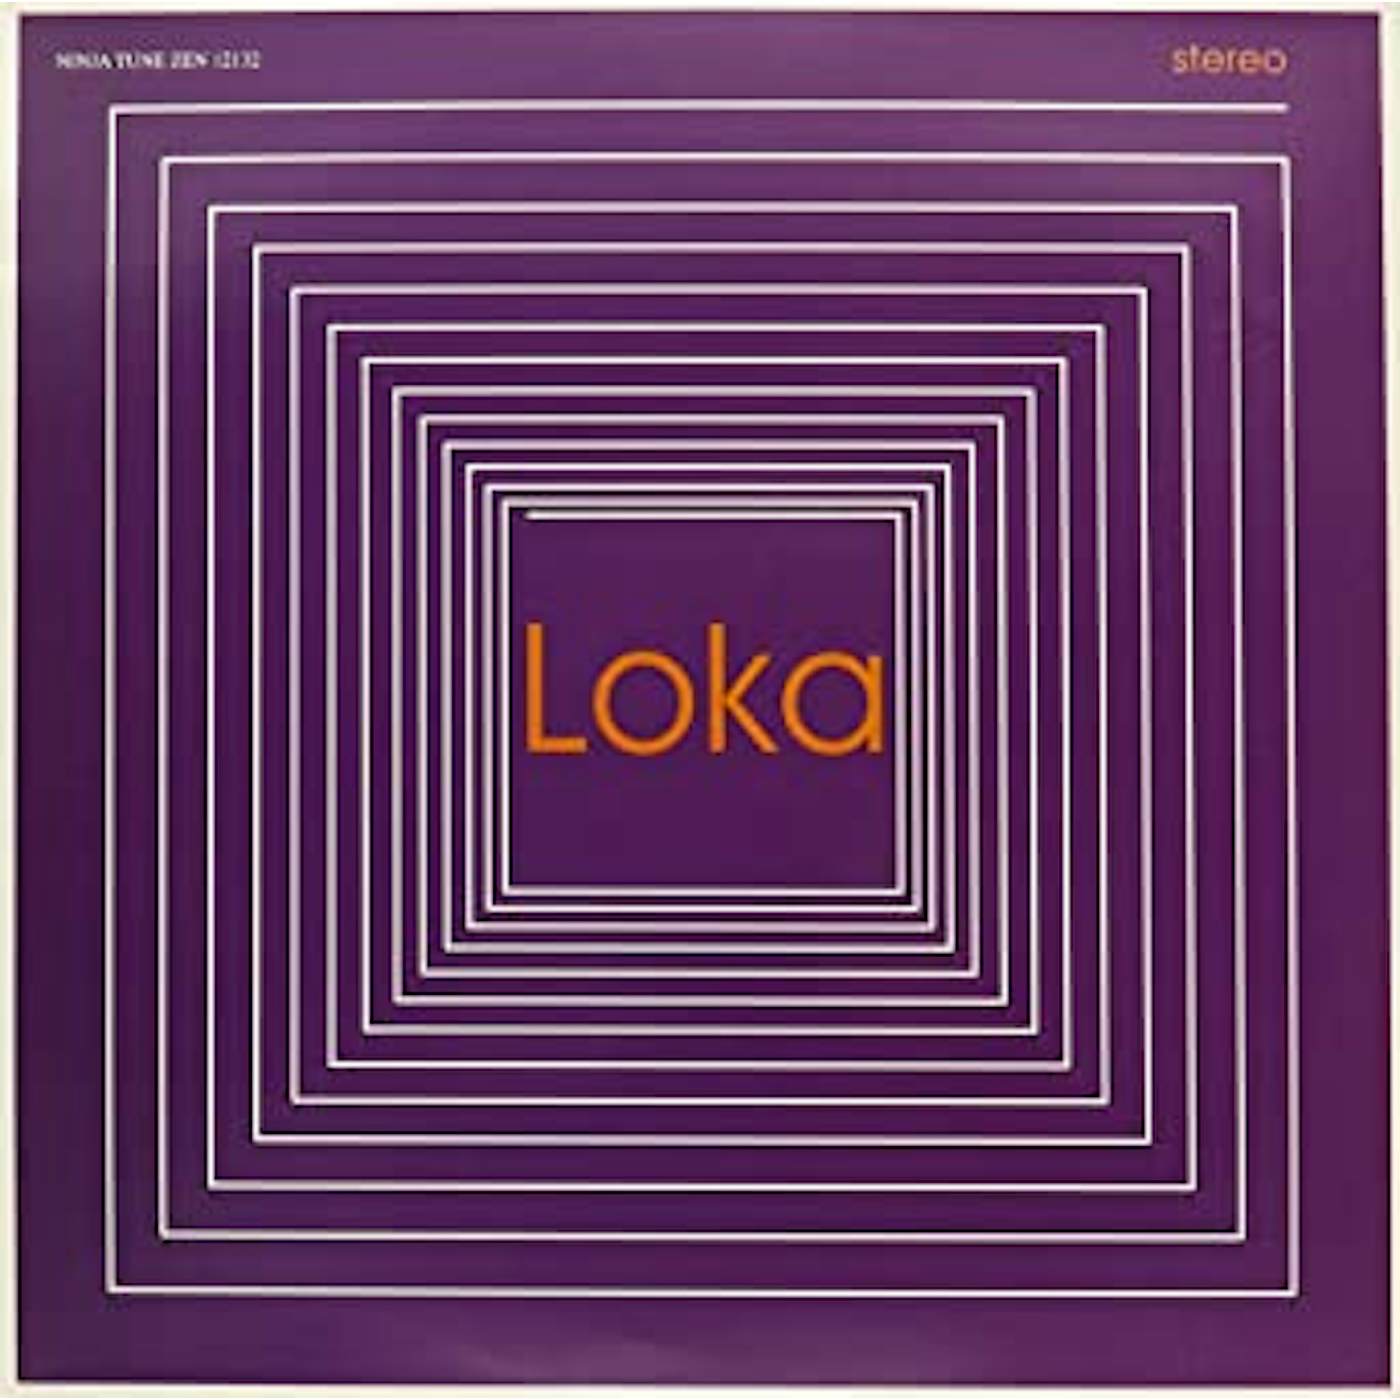 Loka Beginingless Vinyl Record